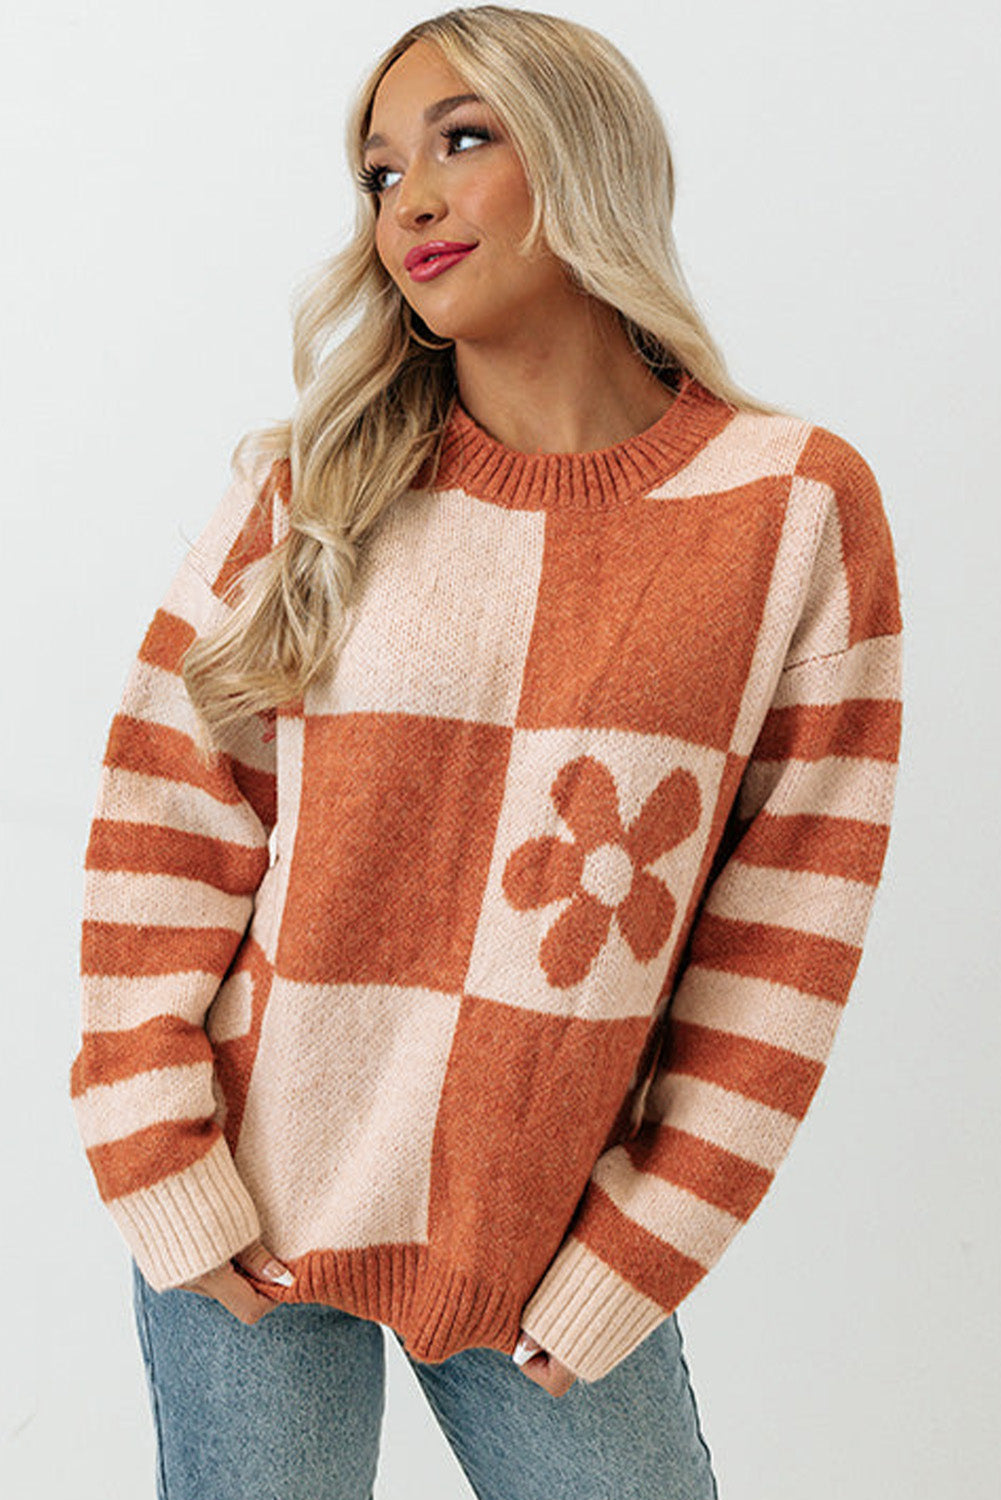 rose checkered flowr sweater - pink/orange/mist/orchid